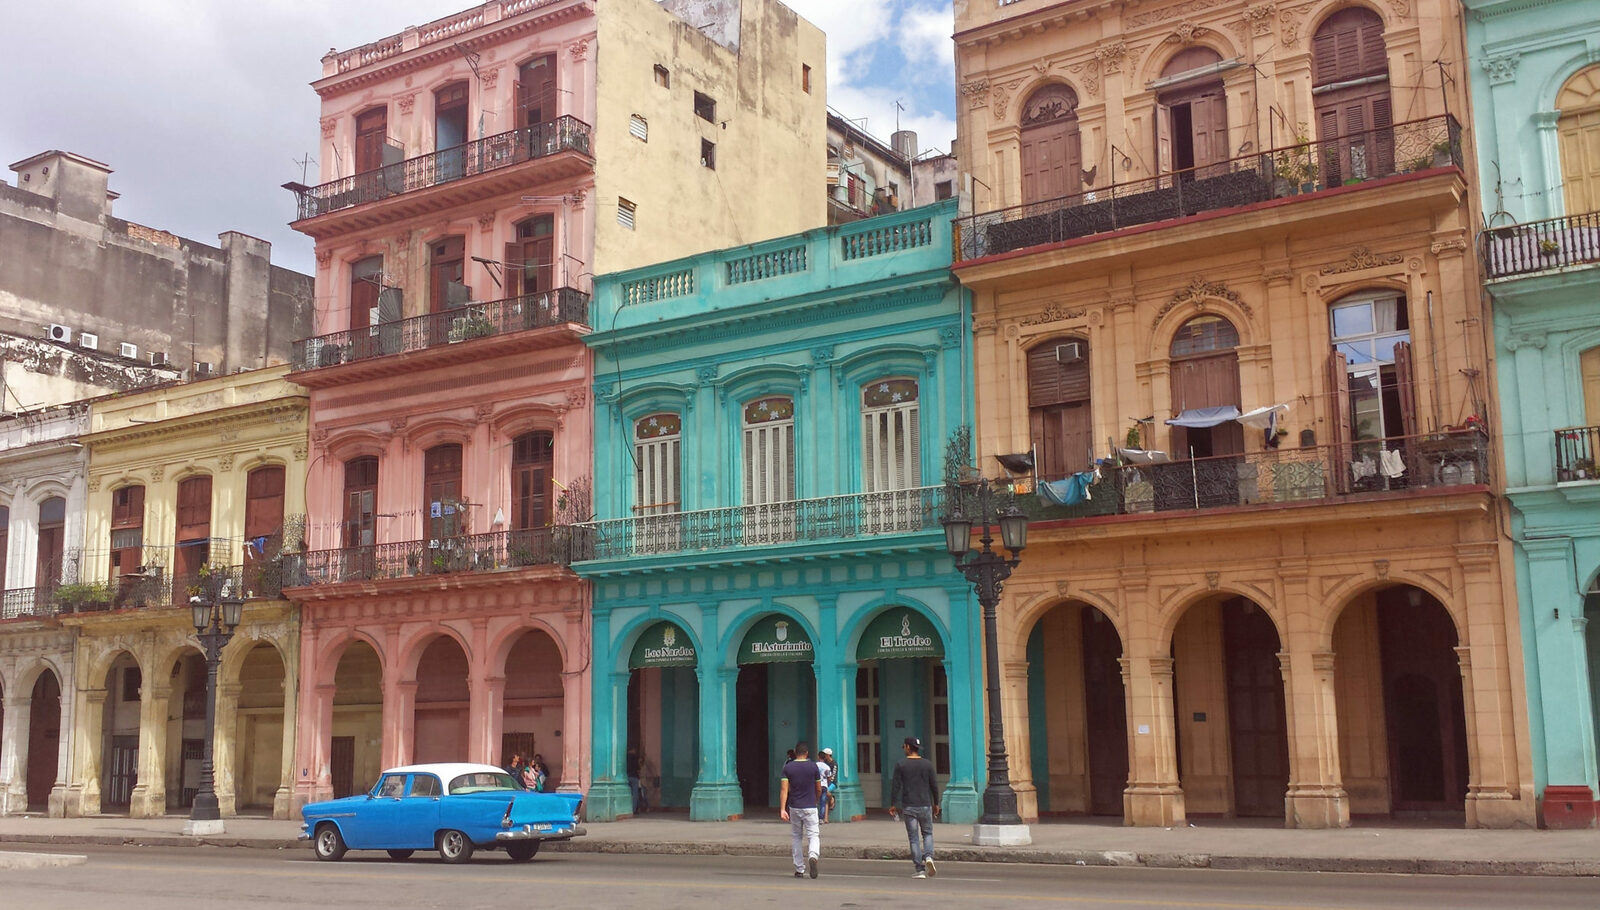 Kuba - Cayo Livisa und Havanna - Das ursprüngliche Kuba - reisen